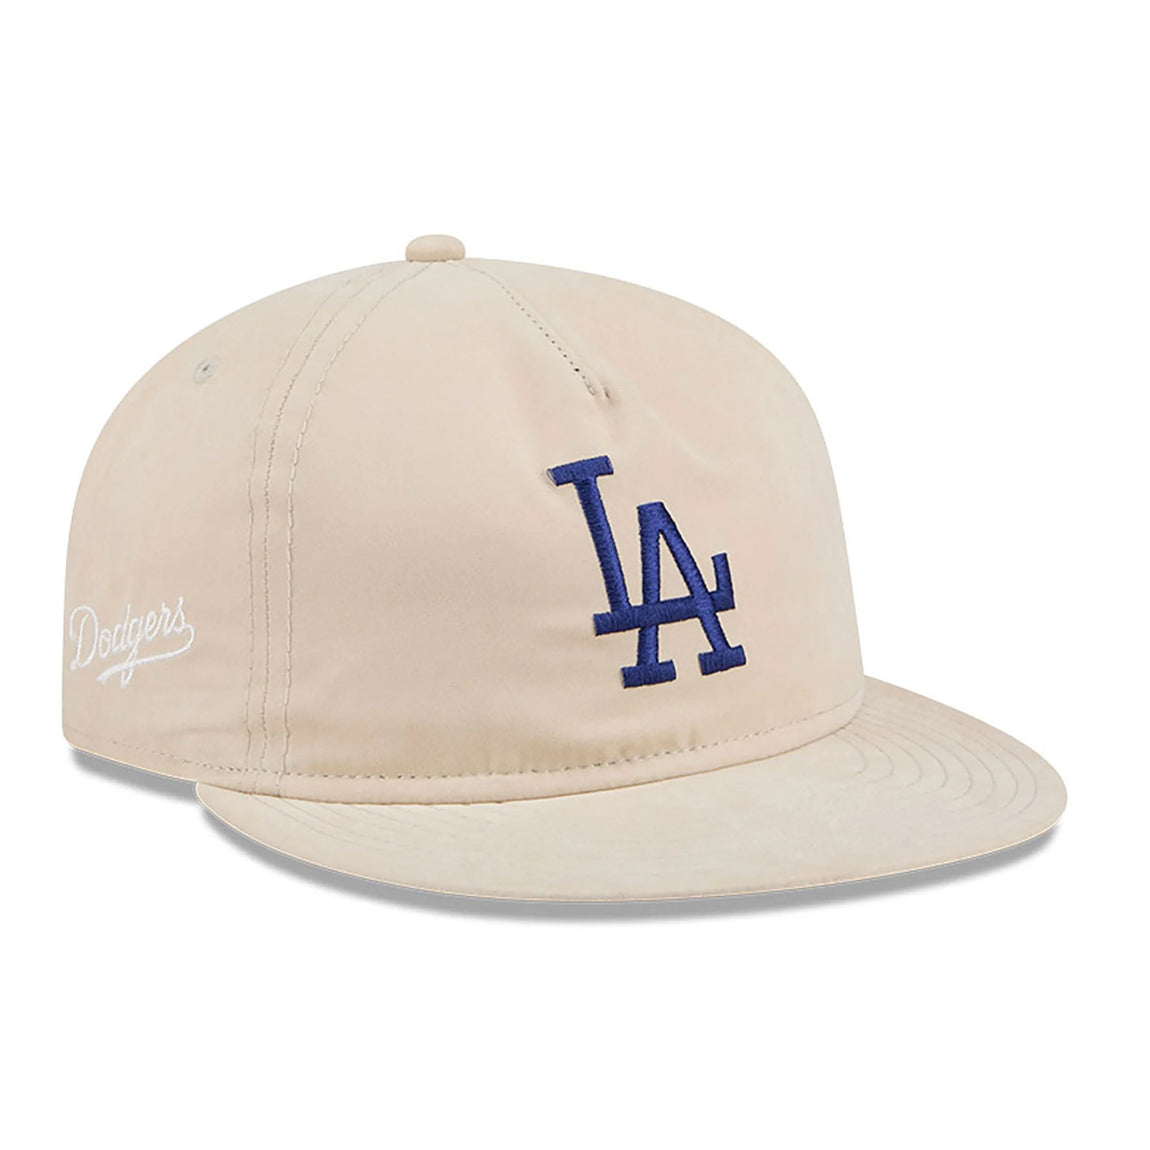 New Era 9FIFTY LA Dodgers Brushed Nylon Strapback Cap (Cream) - New Era 9FIFTY LA Dodgers Brushed Nylon Strapback Cap (Cream) - 